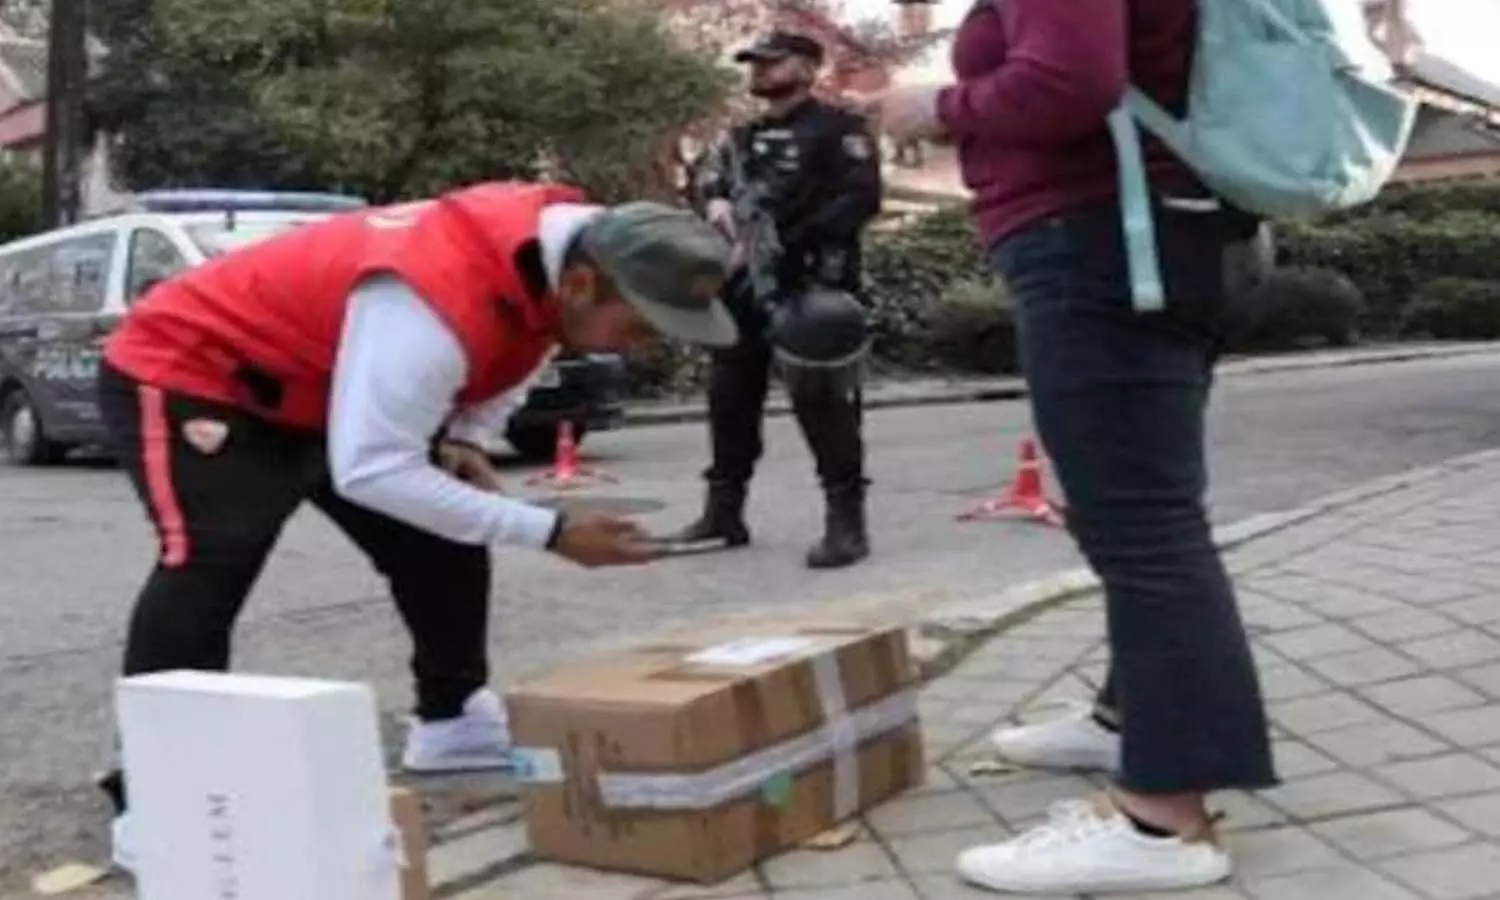 Bloody parcels being sent to Ukrainian embassies in Europe, Russia accused of sending the package